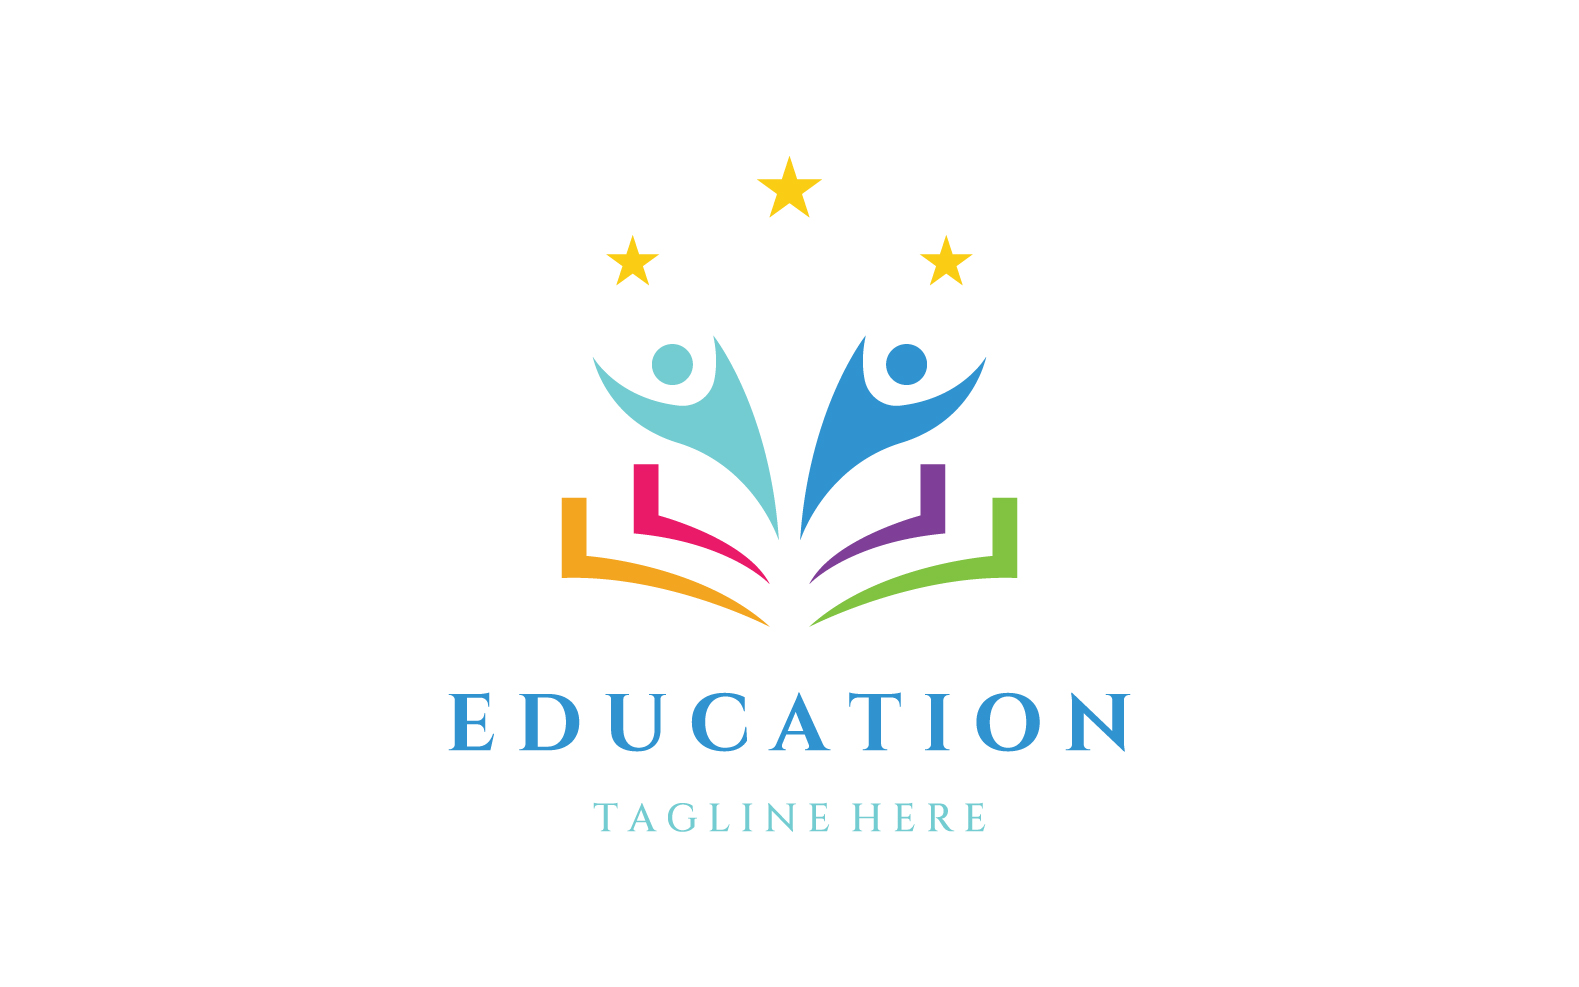 Education university school logo vector 10